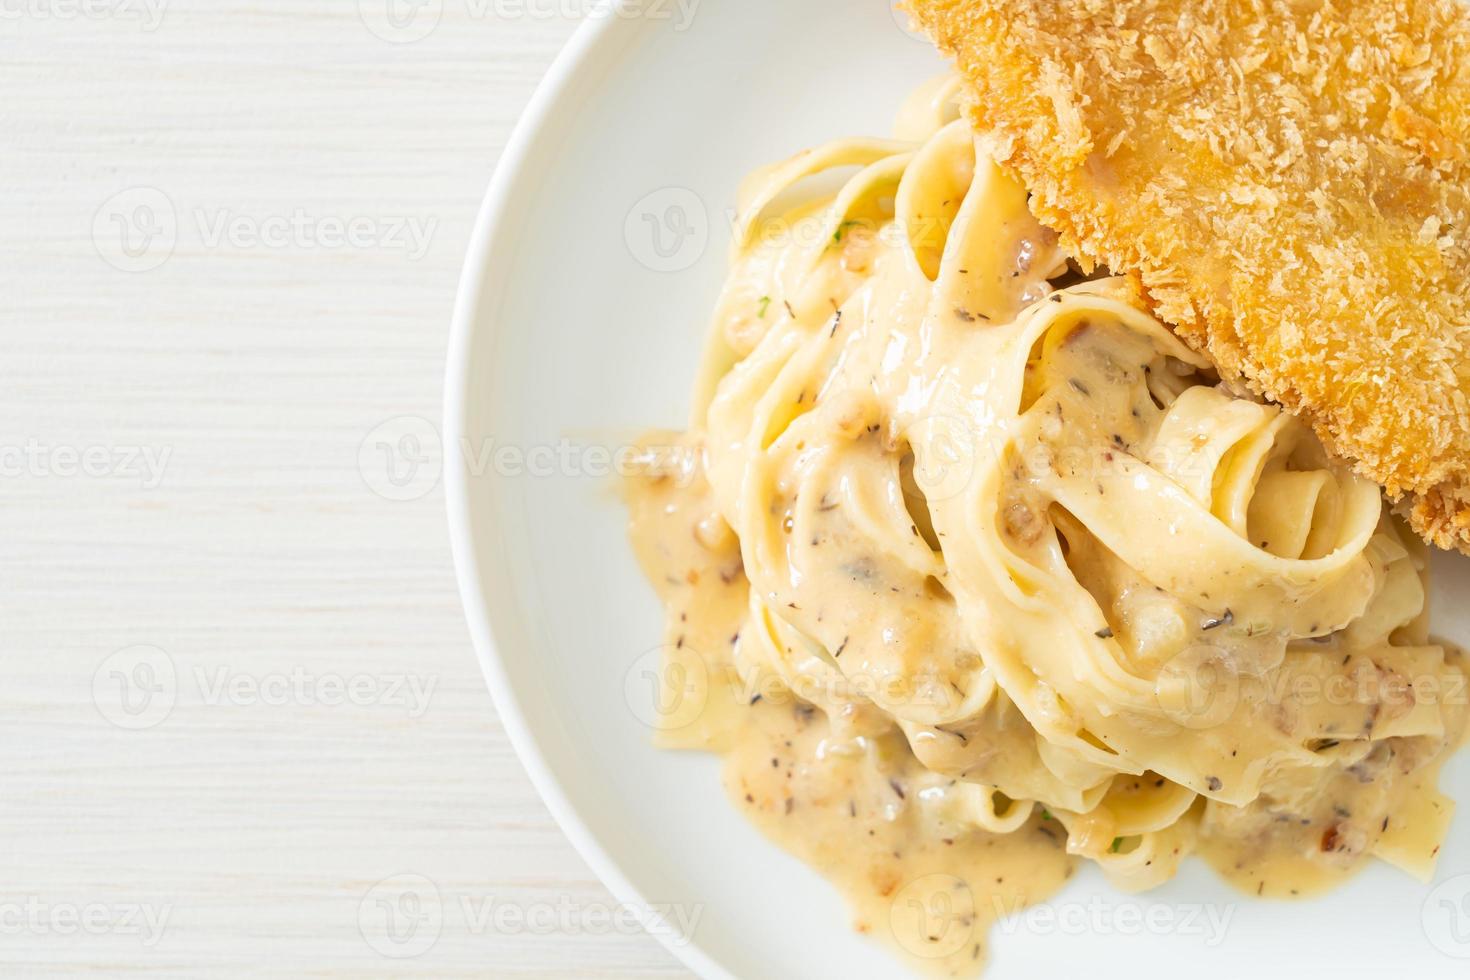 huisgemaakte fettuccine pasta witte roomsaus met gebakken vis foto